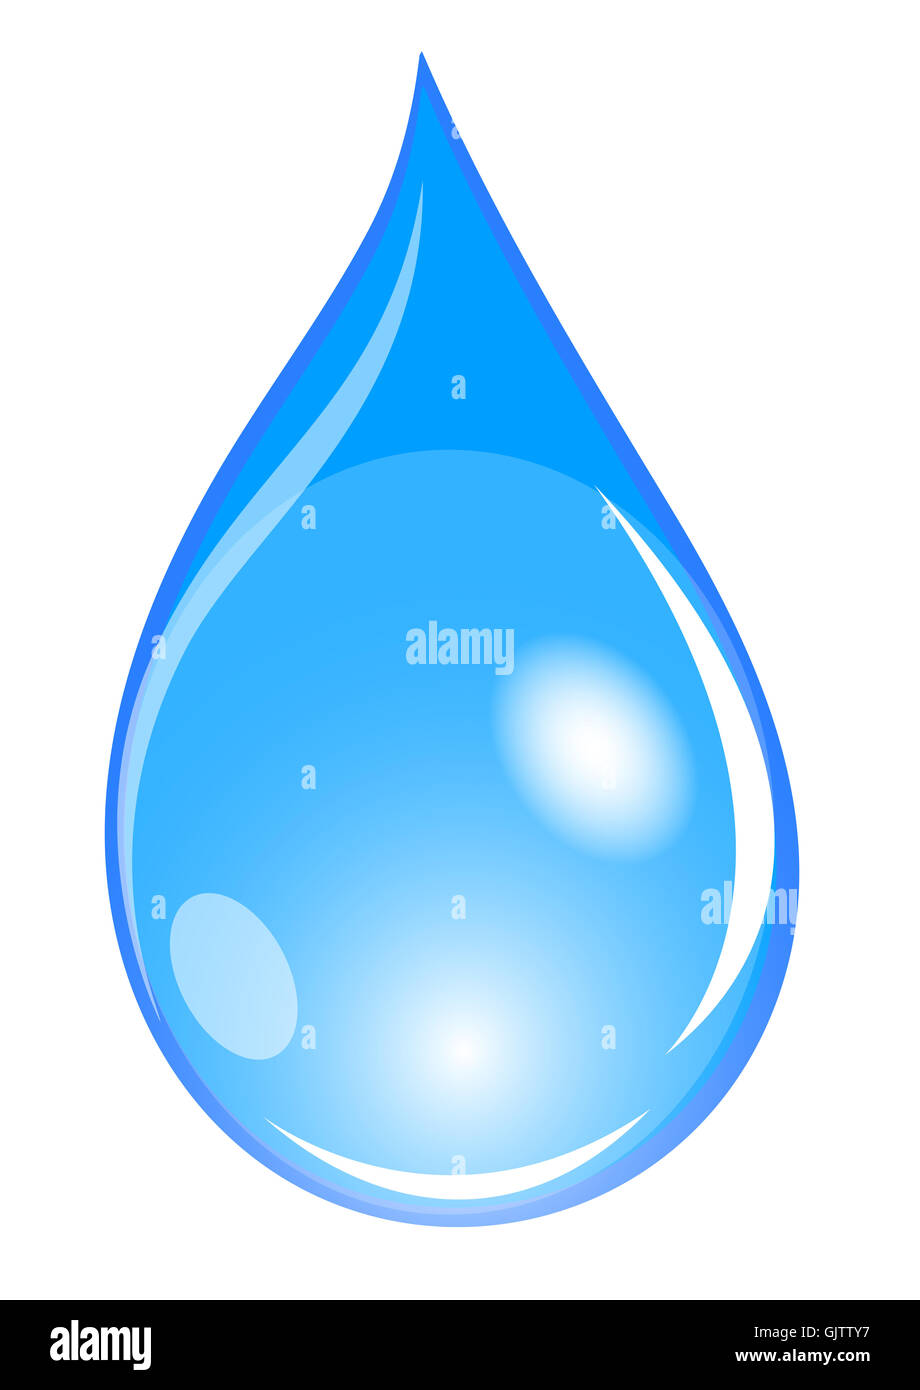 illustration blue water drop Stock Photo